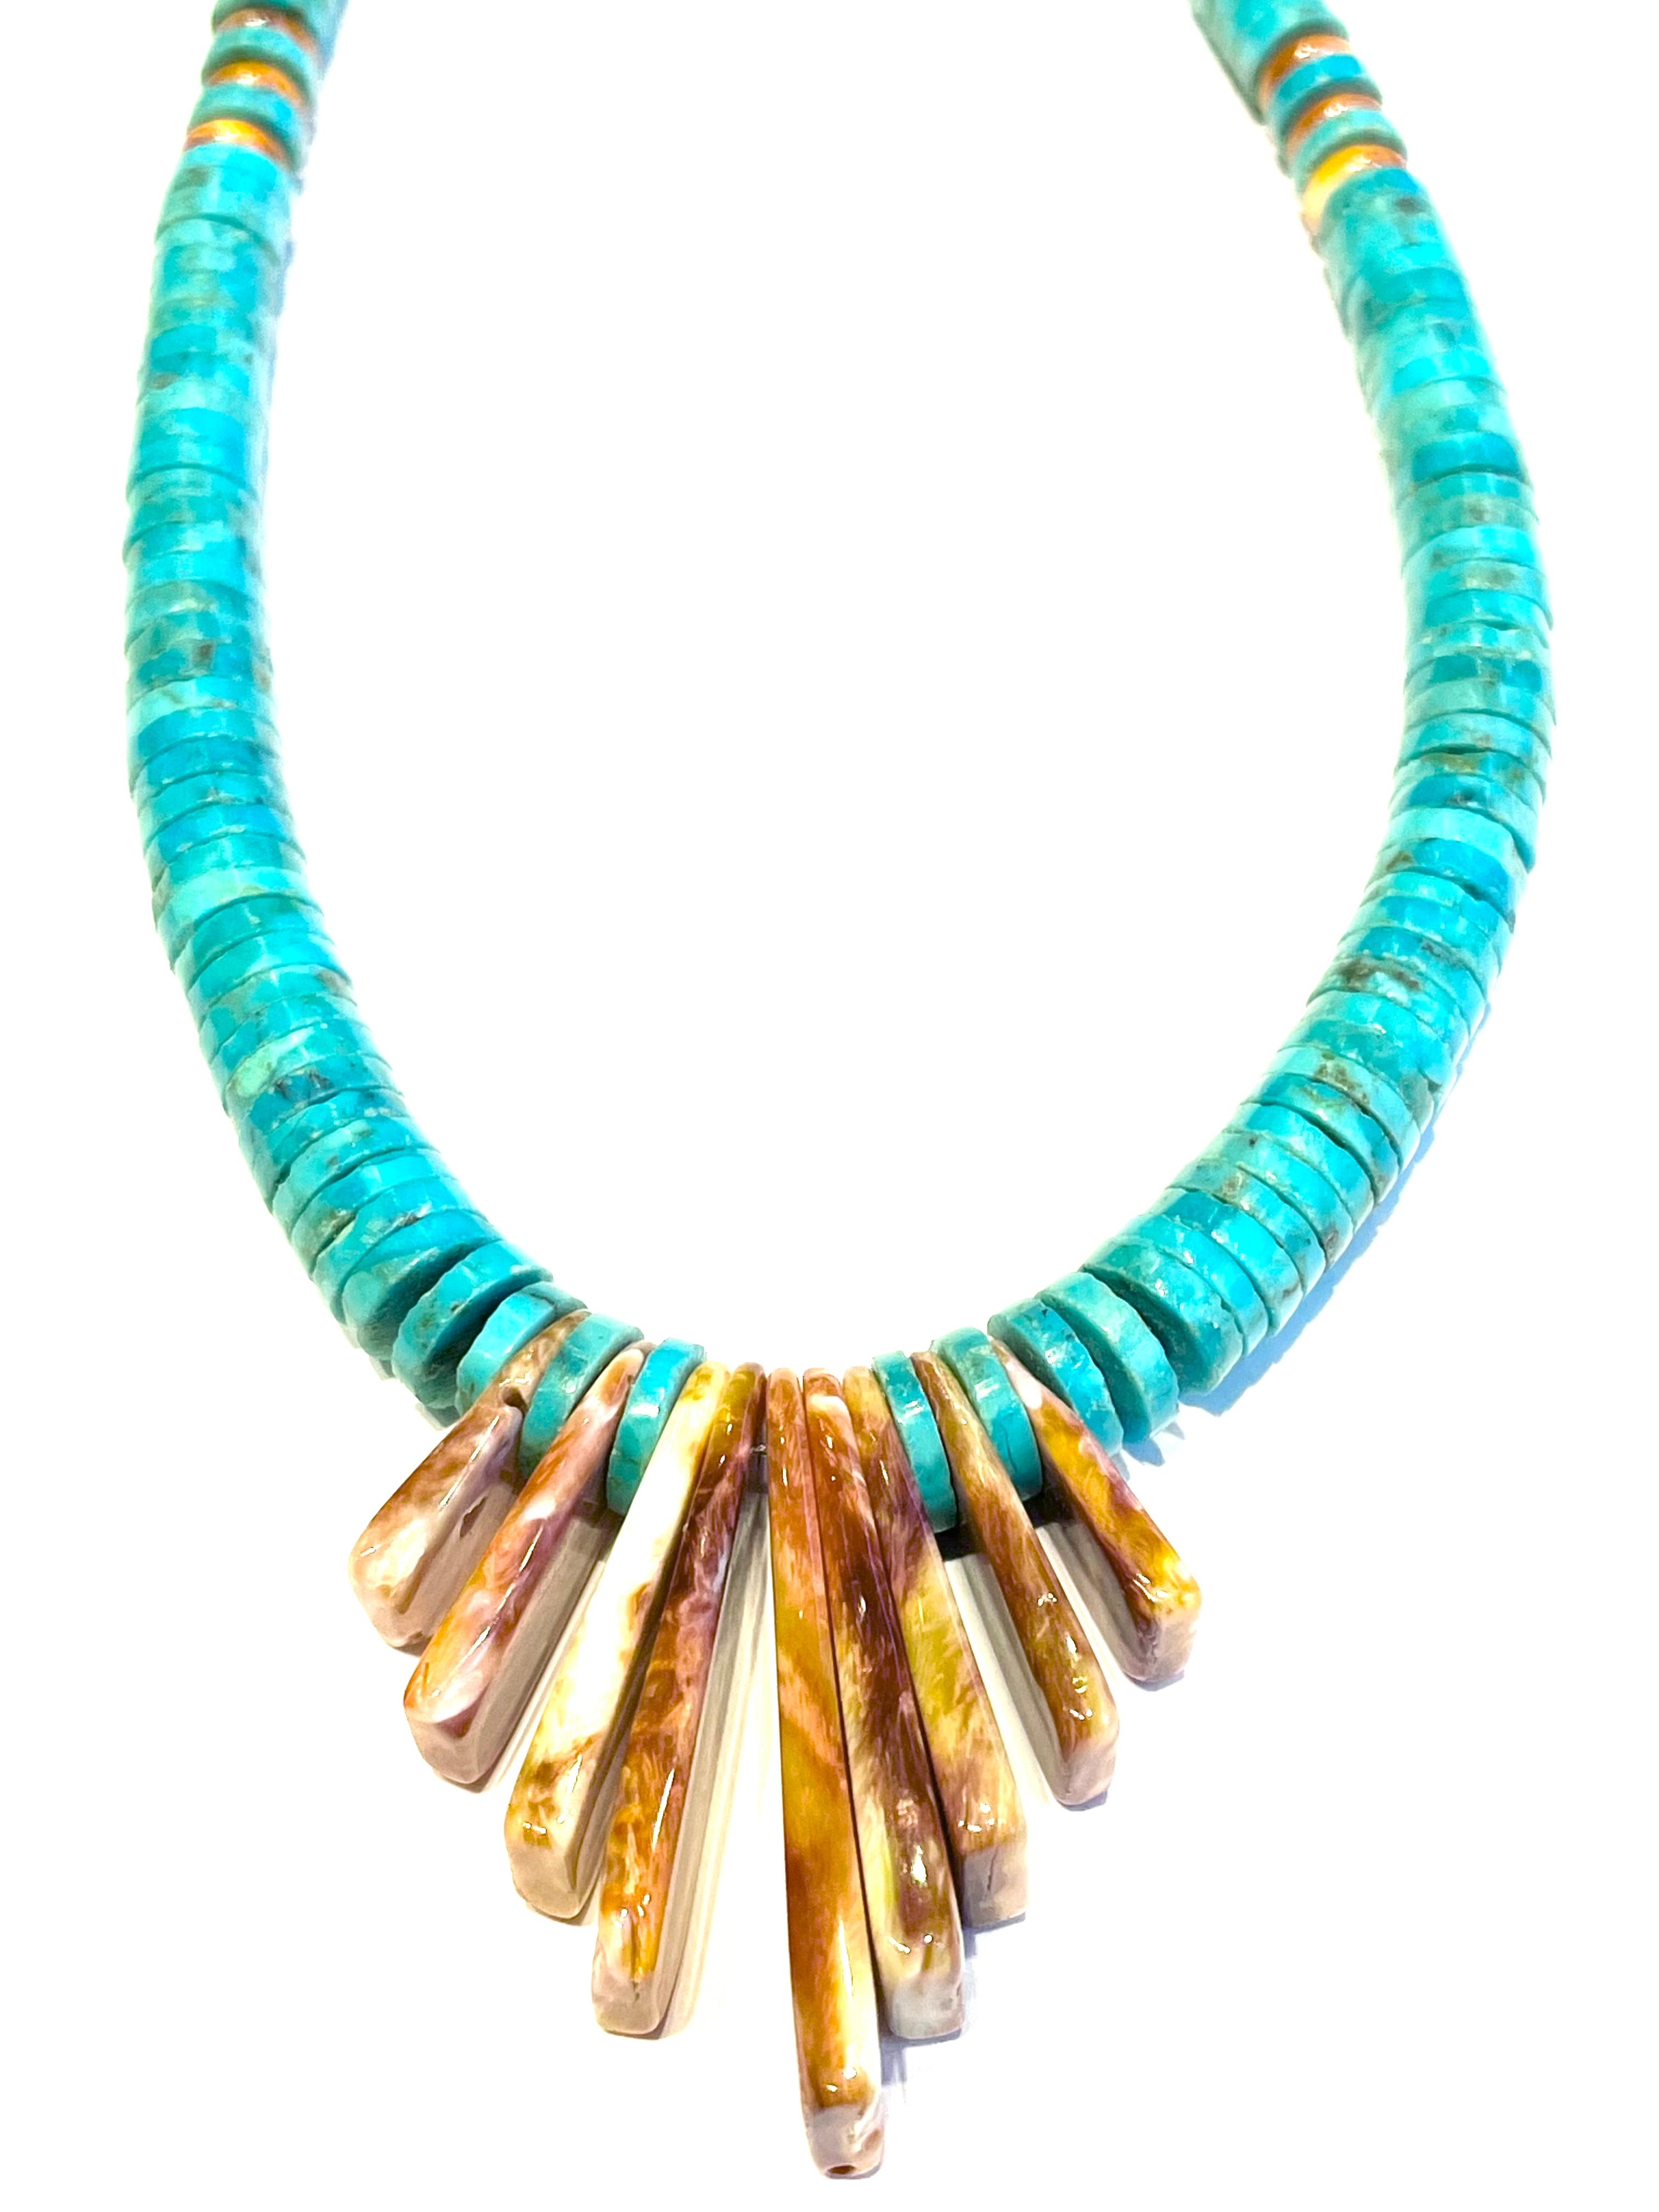 Stunning Santo Domingo turquoise necklace